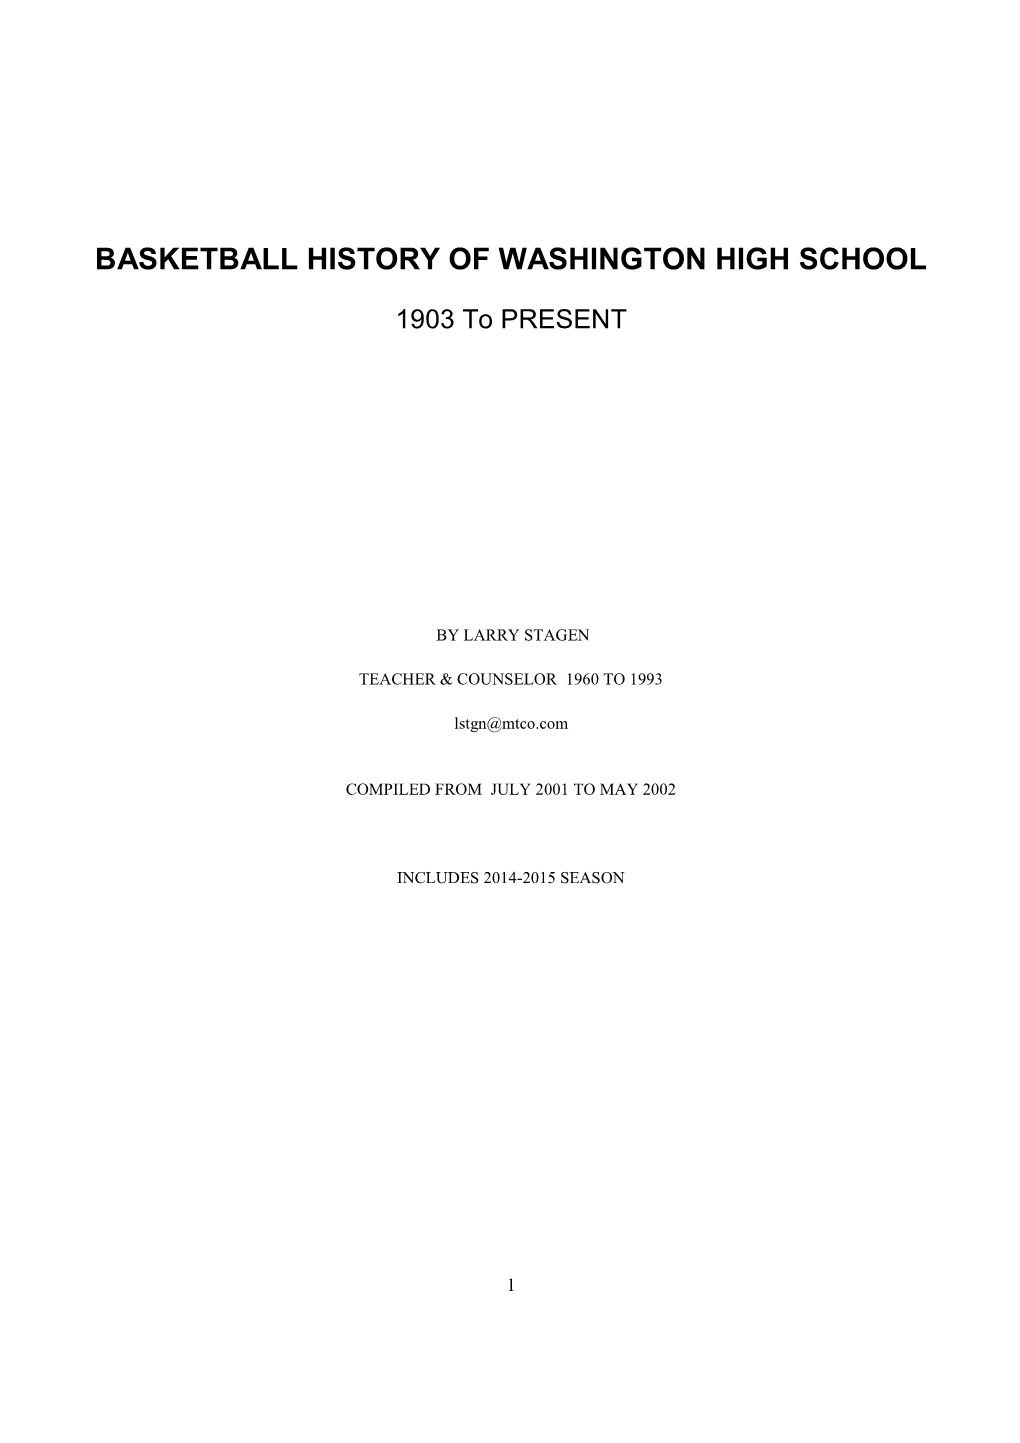 Basketball History of Washington High School